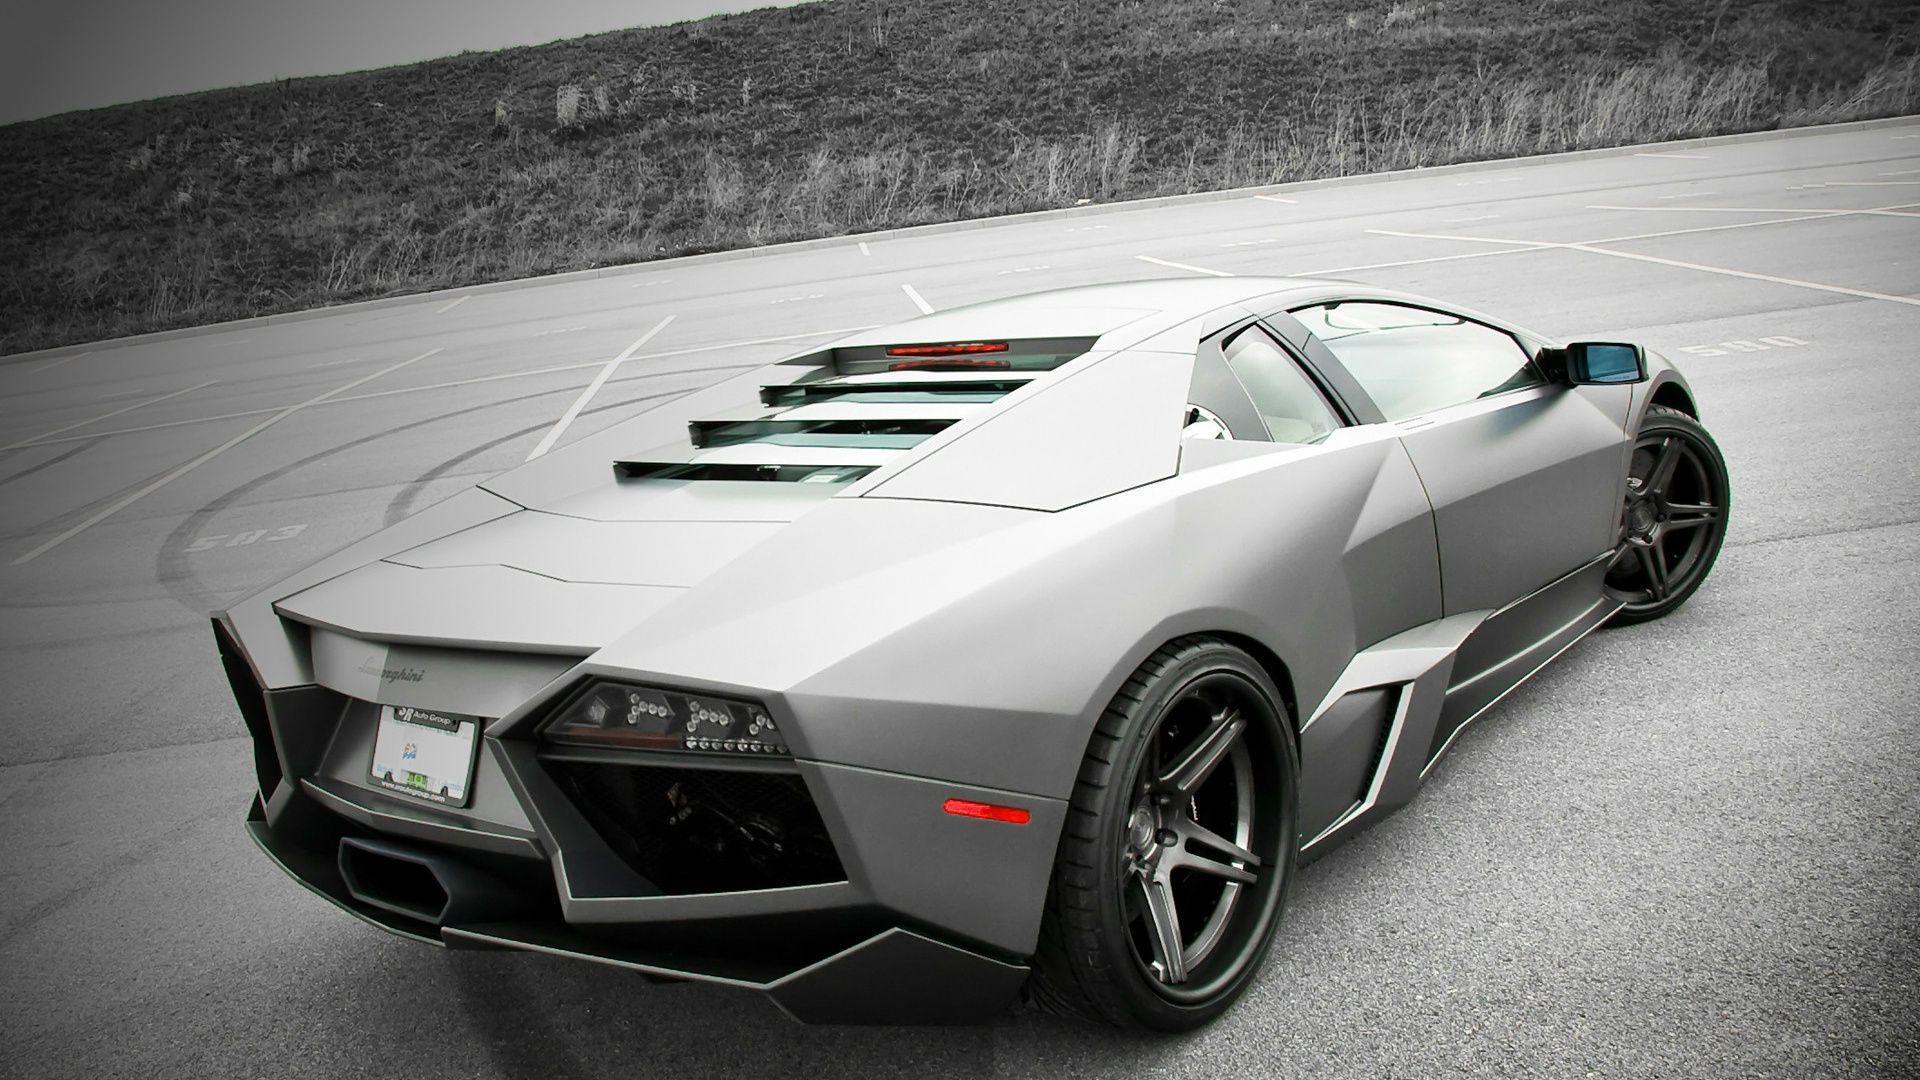 Picture Lamborghini Reventon Car Wallpaper, Image